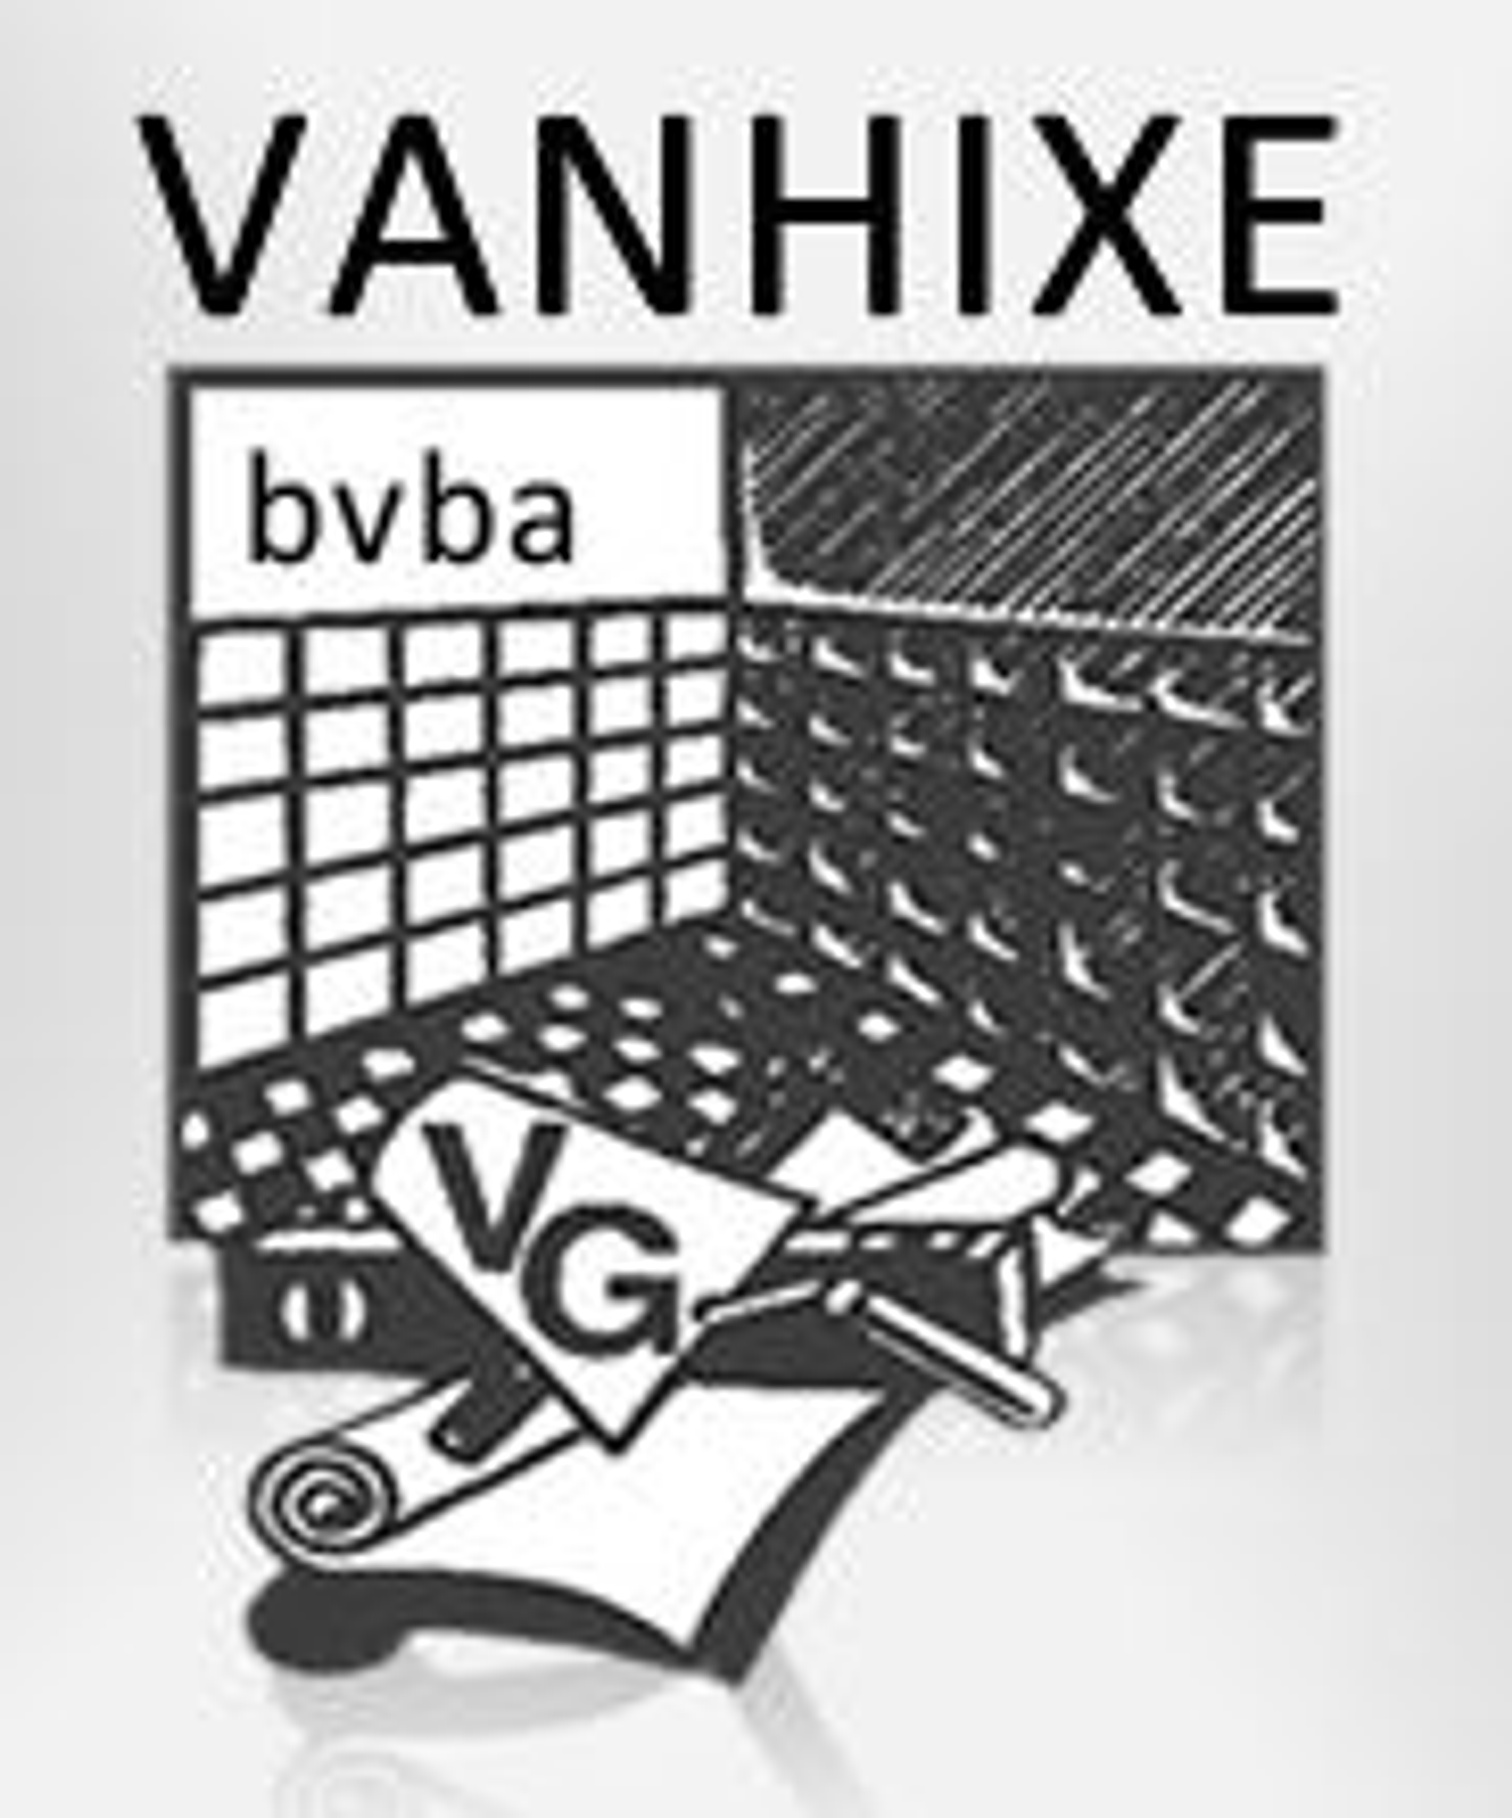 Vanhixe bvba logo